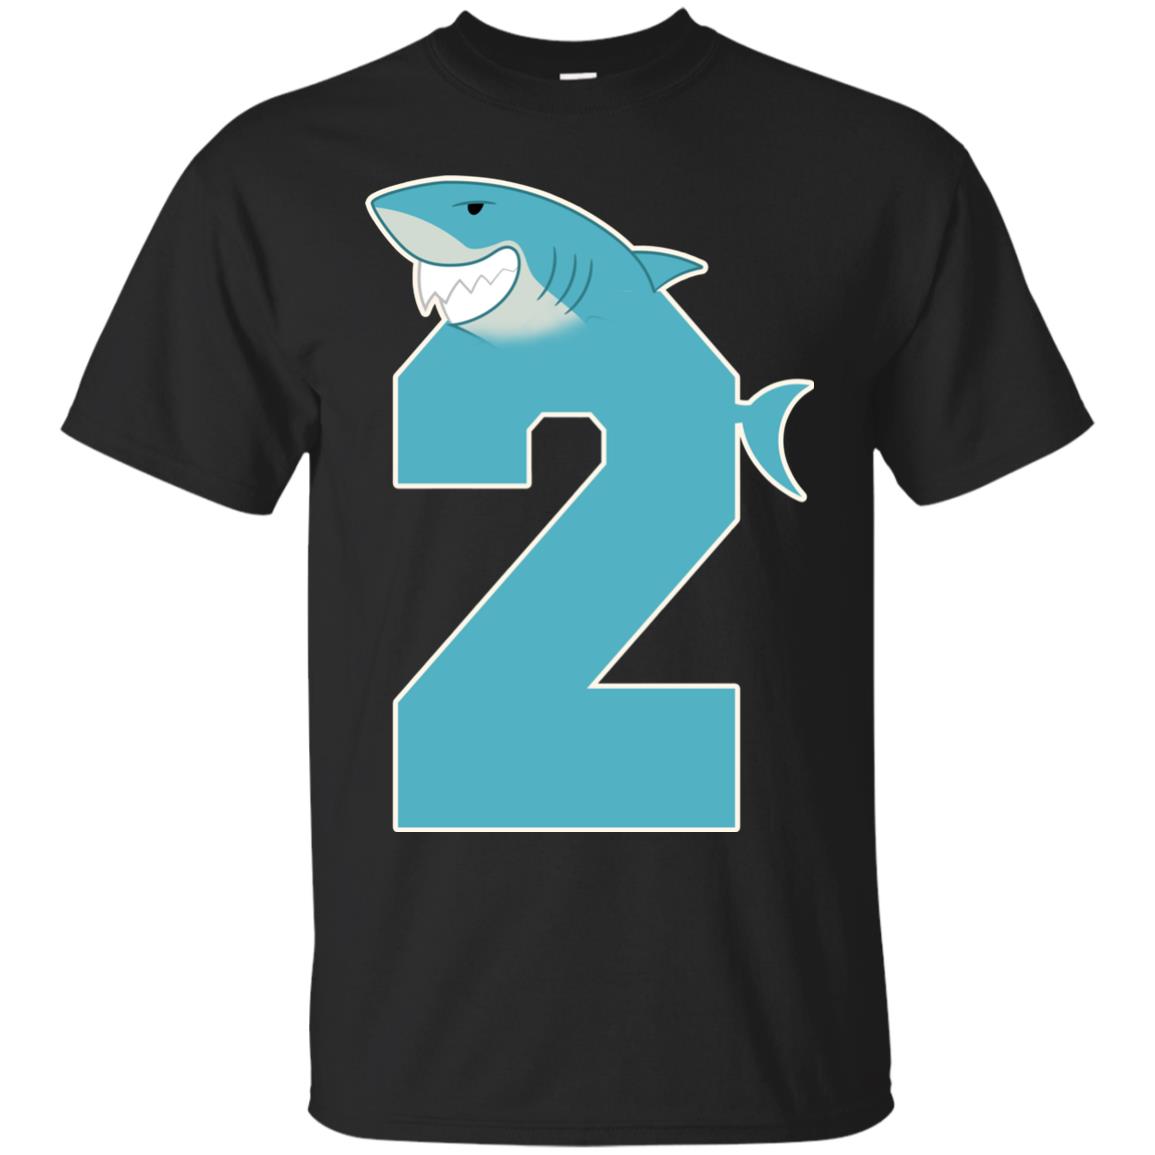 2nd Birthday Shark Party ShirtG200 Gildan Ultra Cotton T-Shirt